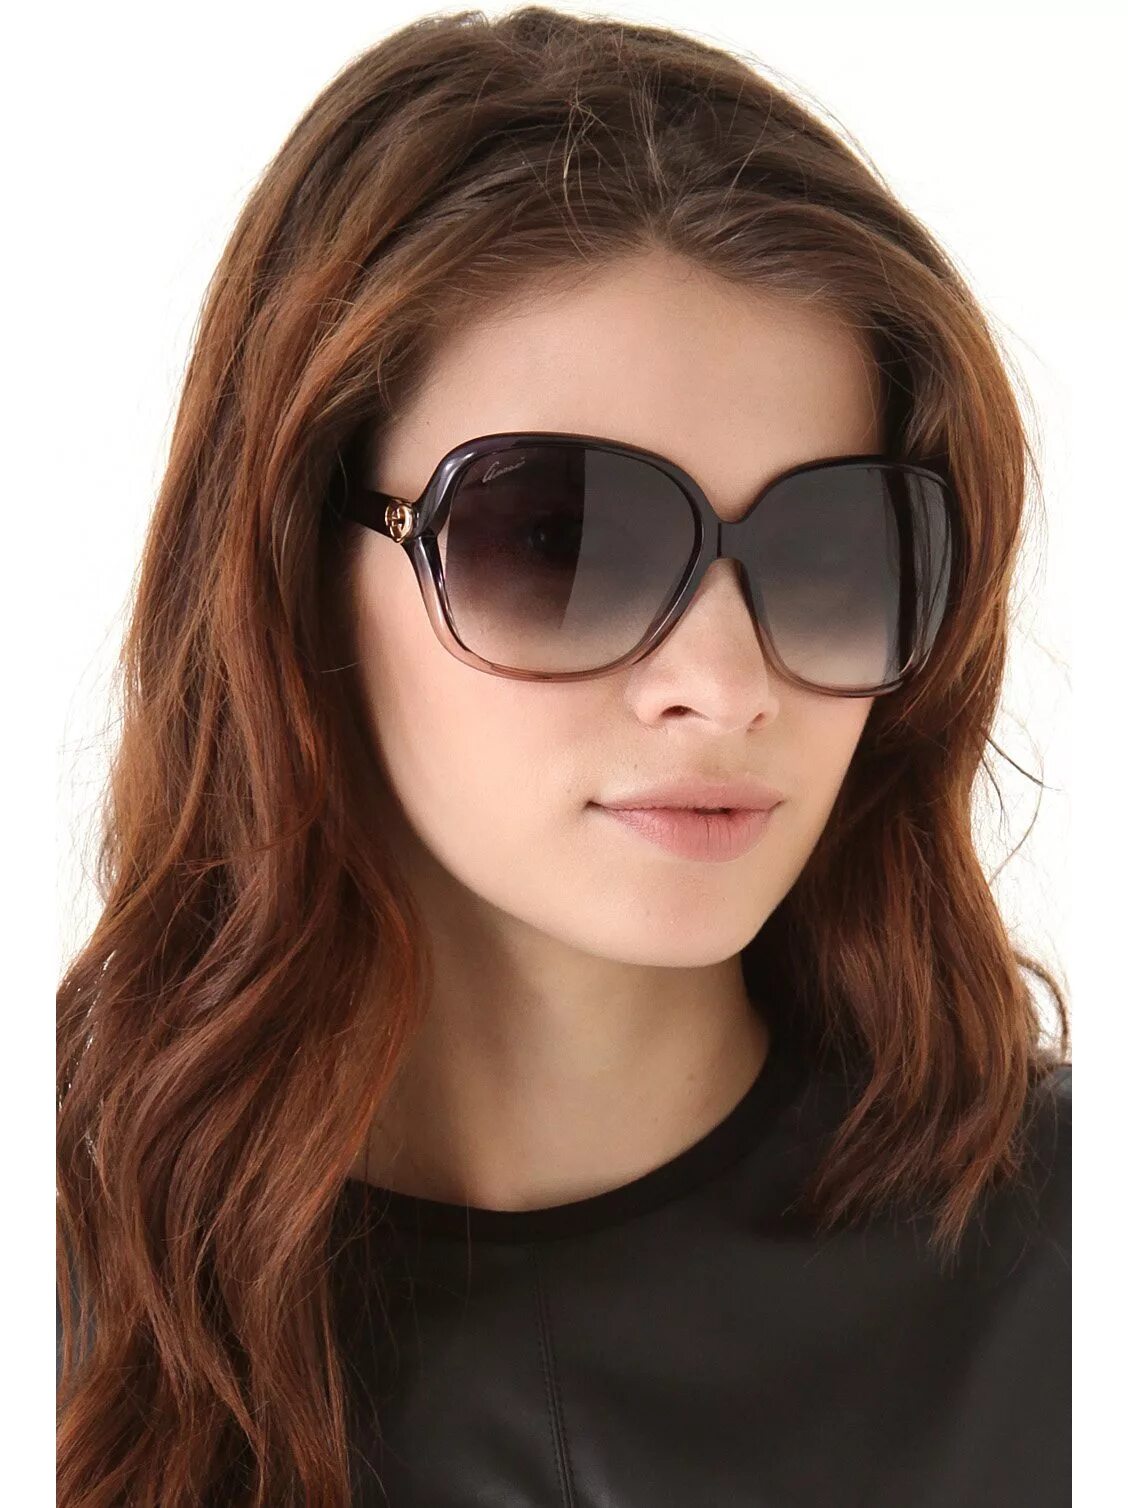 Солнцезащитные очки. Очки солнцезащитные женские. Очки от солнца женские. Круглые очки солнцезащитные женские. These sunglasses